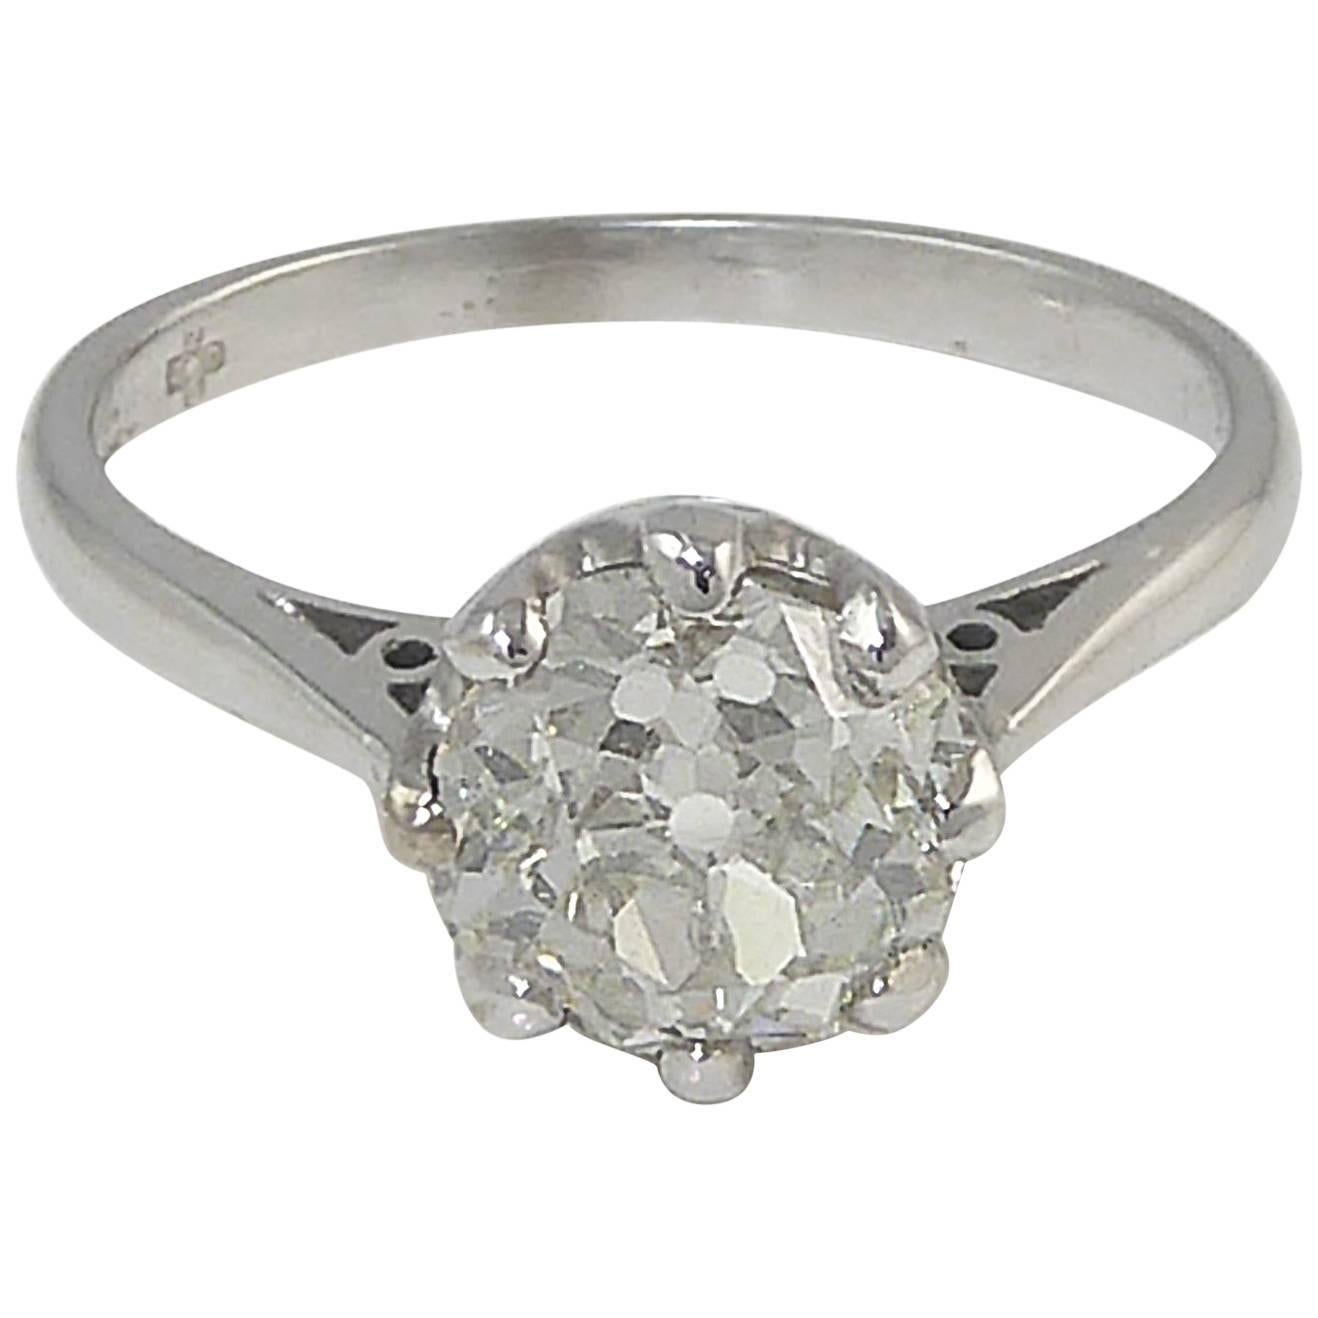 Certified Diamond Engagement Ring, 1.72 Carat Old European Cut, Millennium Mark